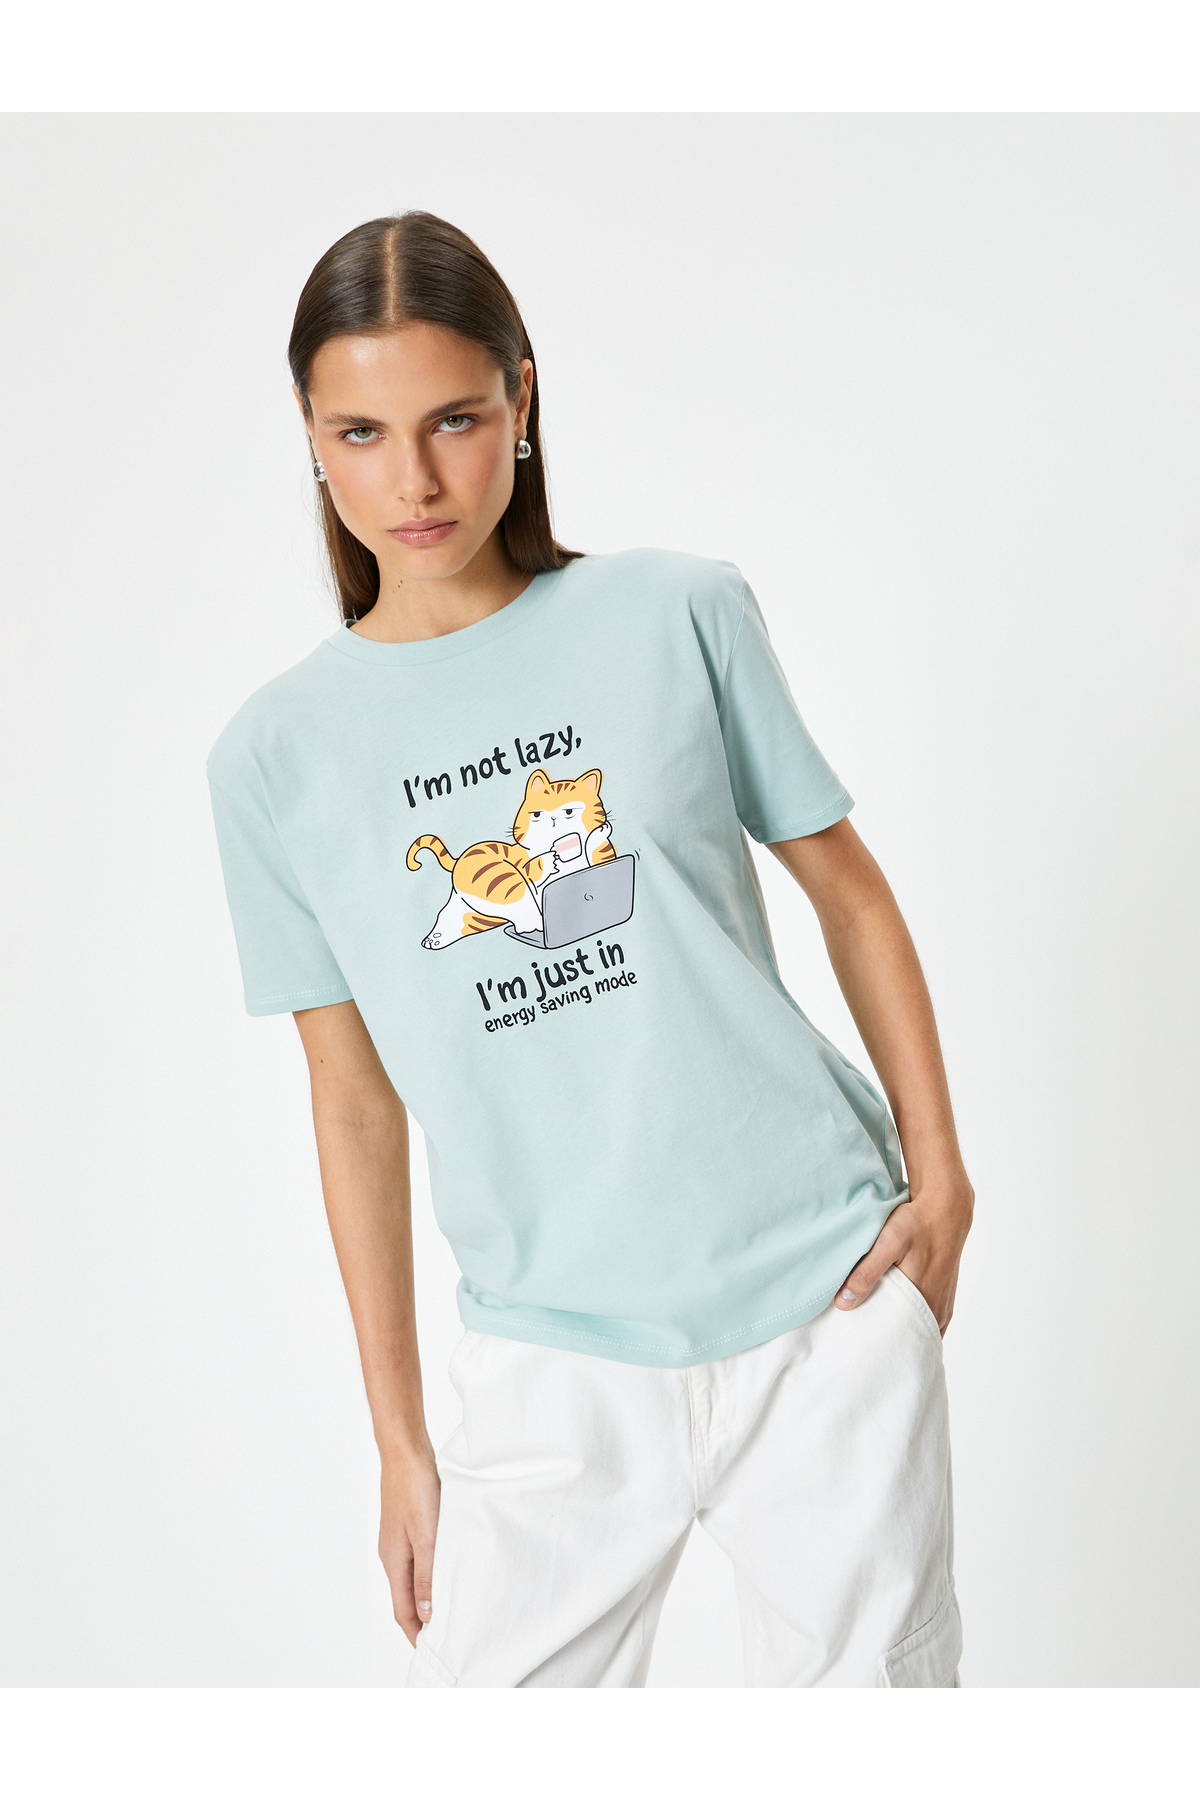 Koton Cat Printed T-Shirt Short Sleeve Crew Neck Comfortable Fit